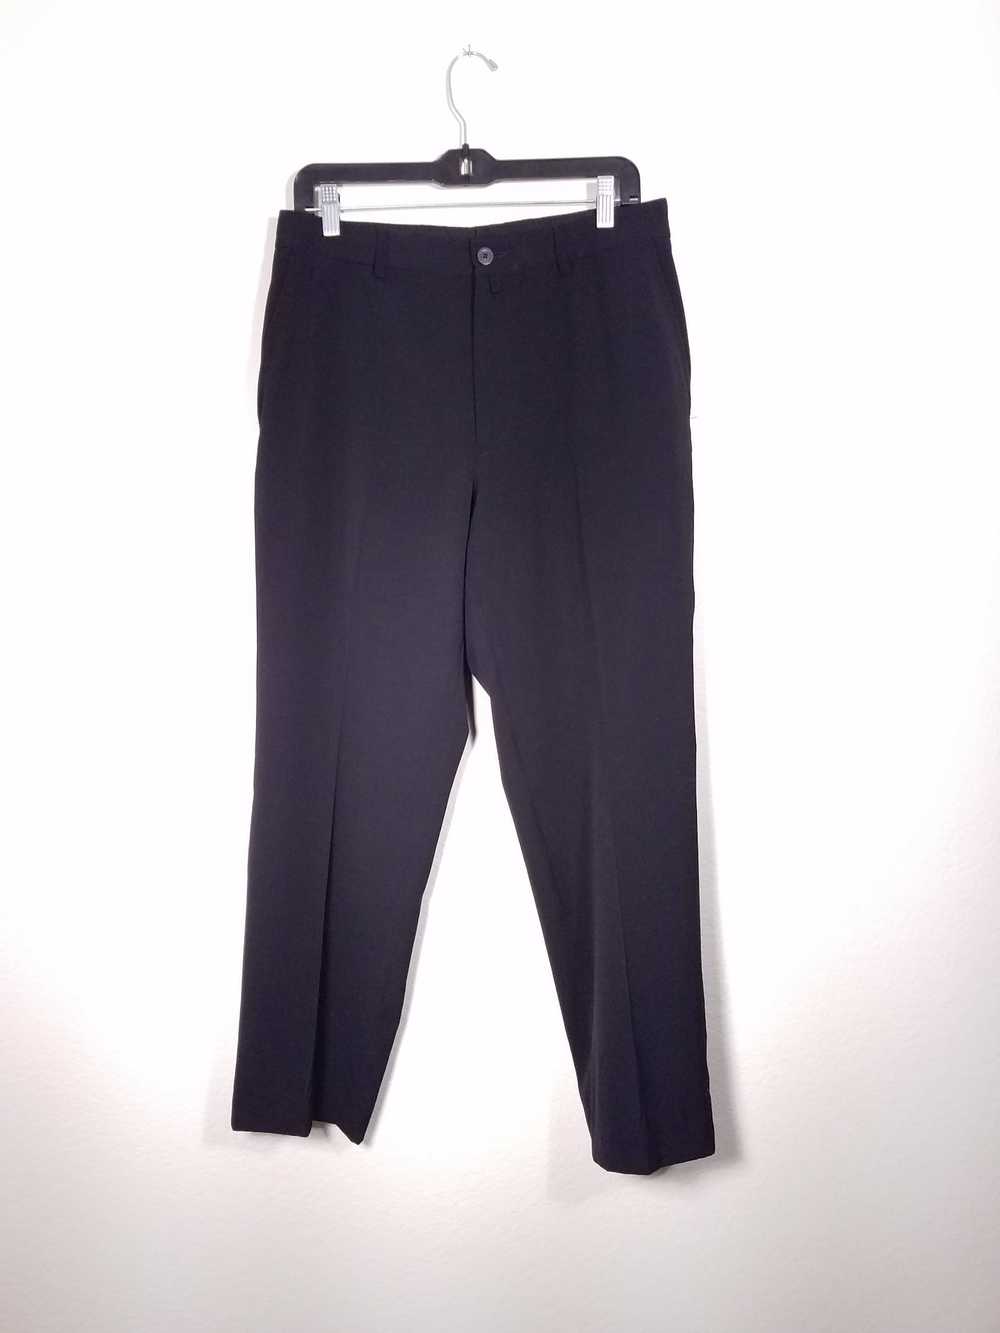 Dries Van Noten Black Pleated Dress Pants - image 1